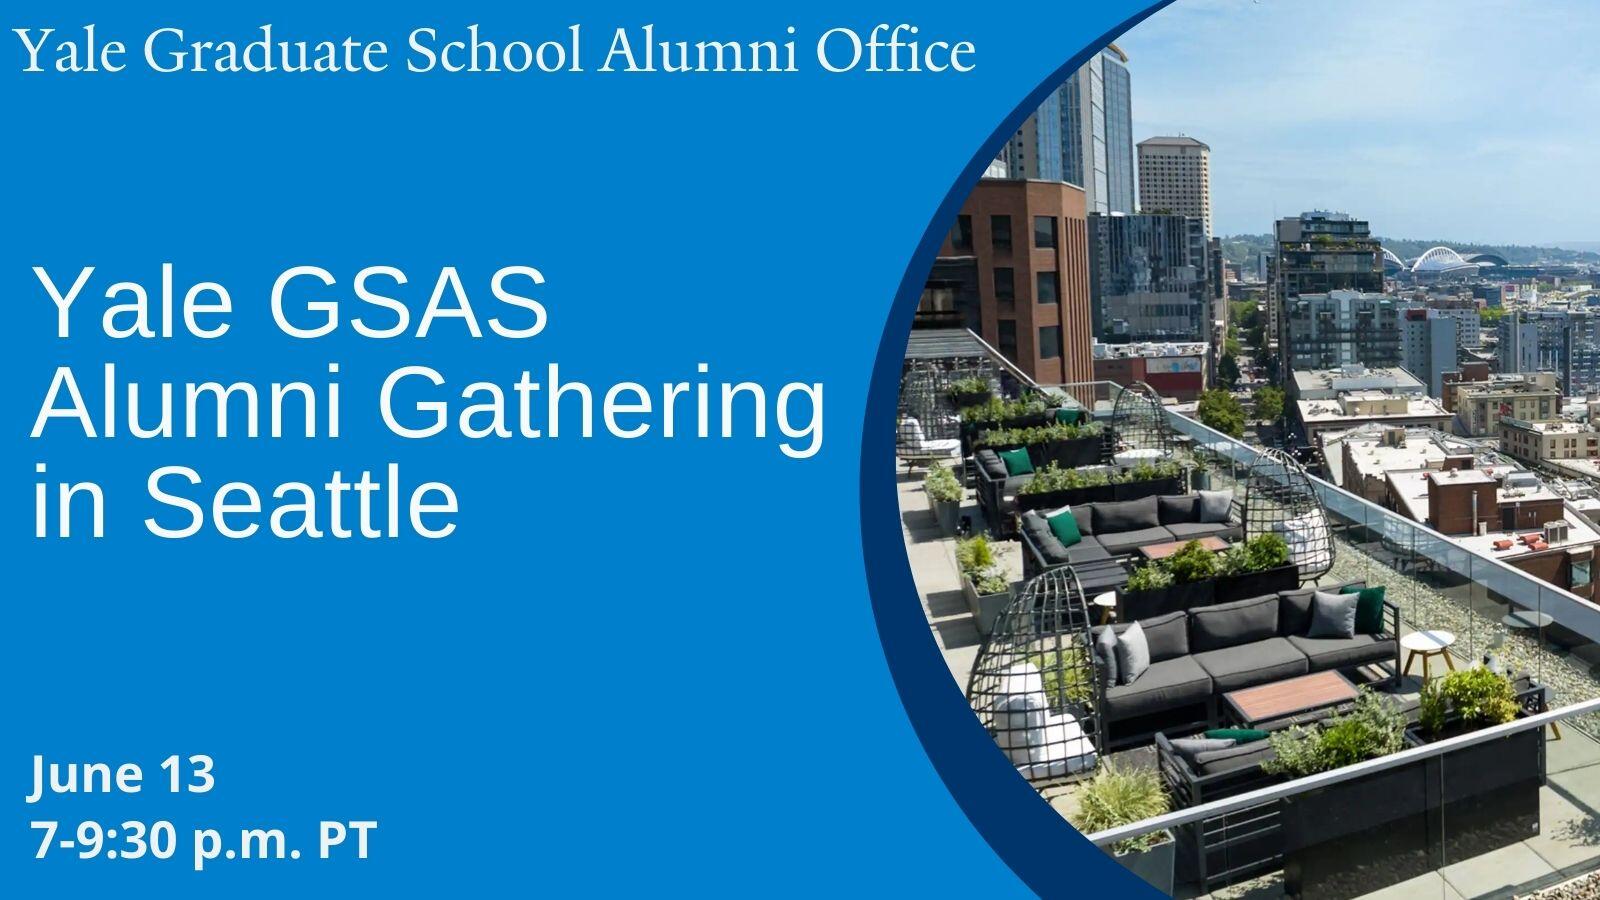 Yale GSAS Alumni Gathering in Seattle